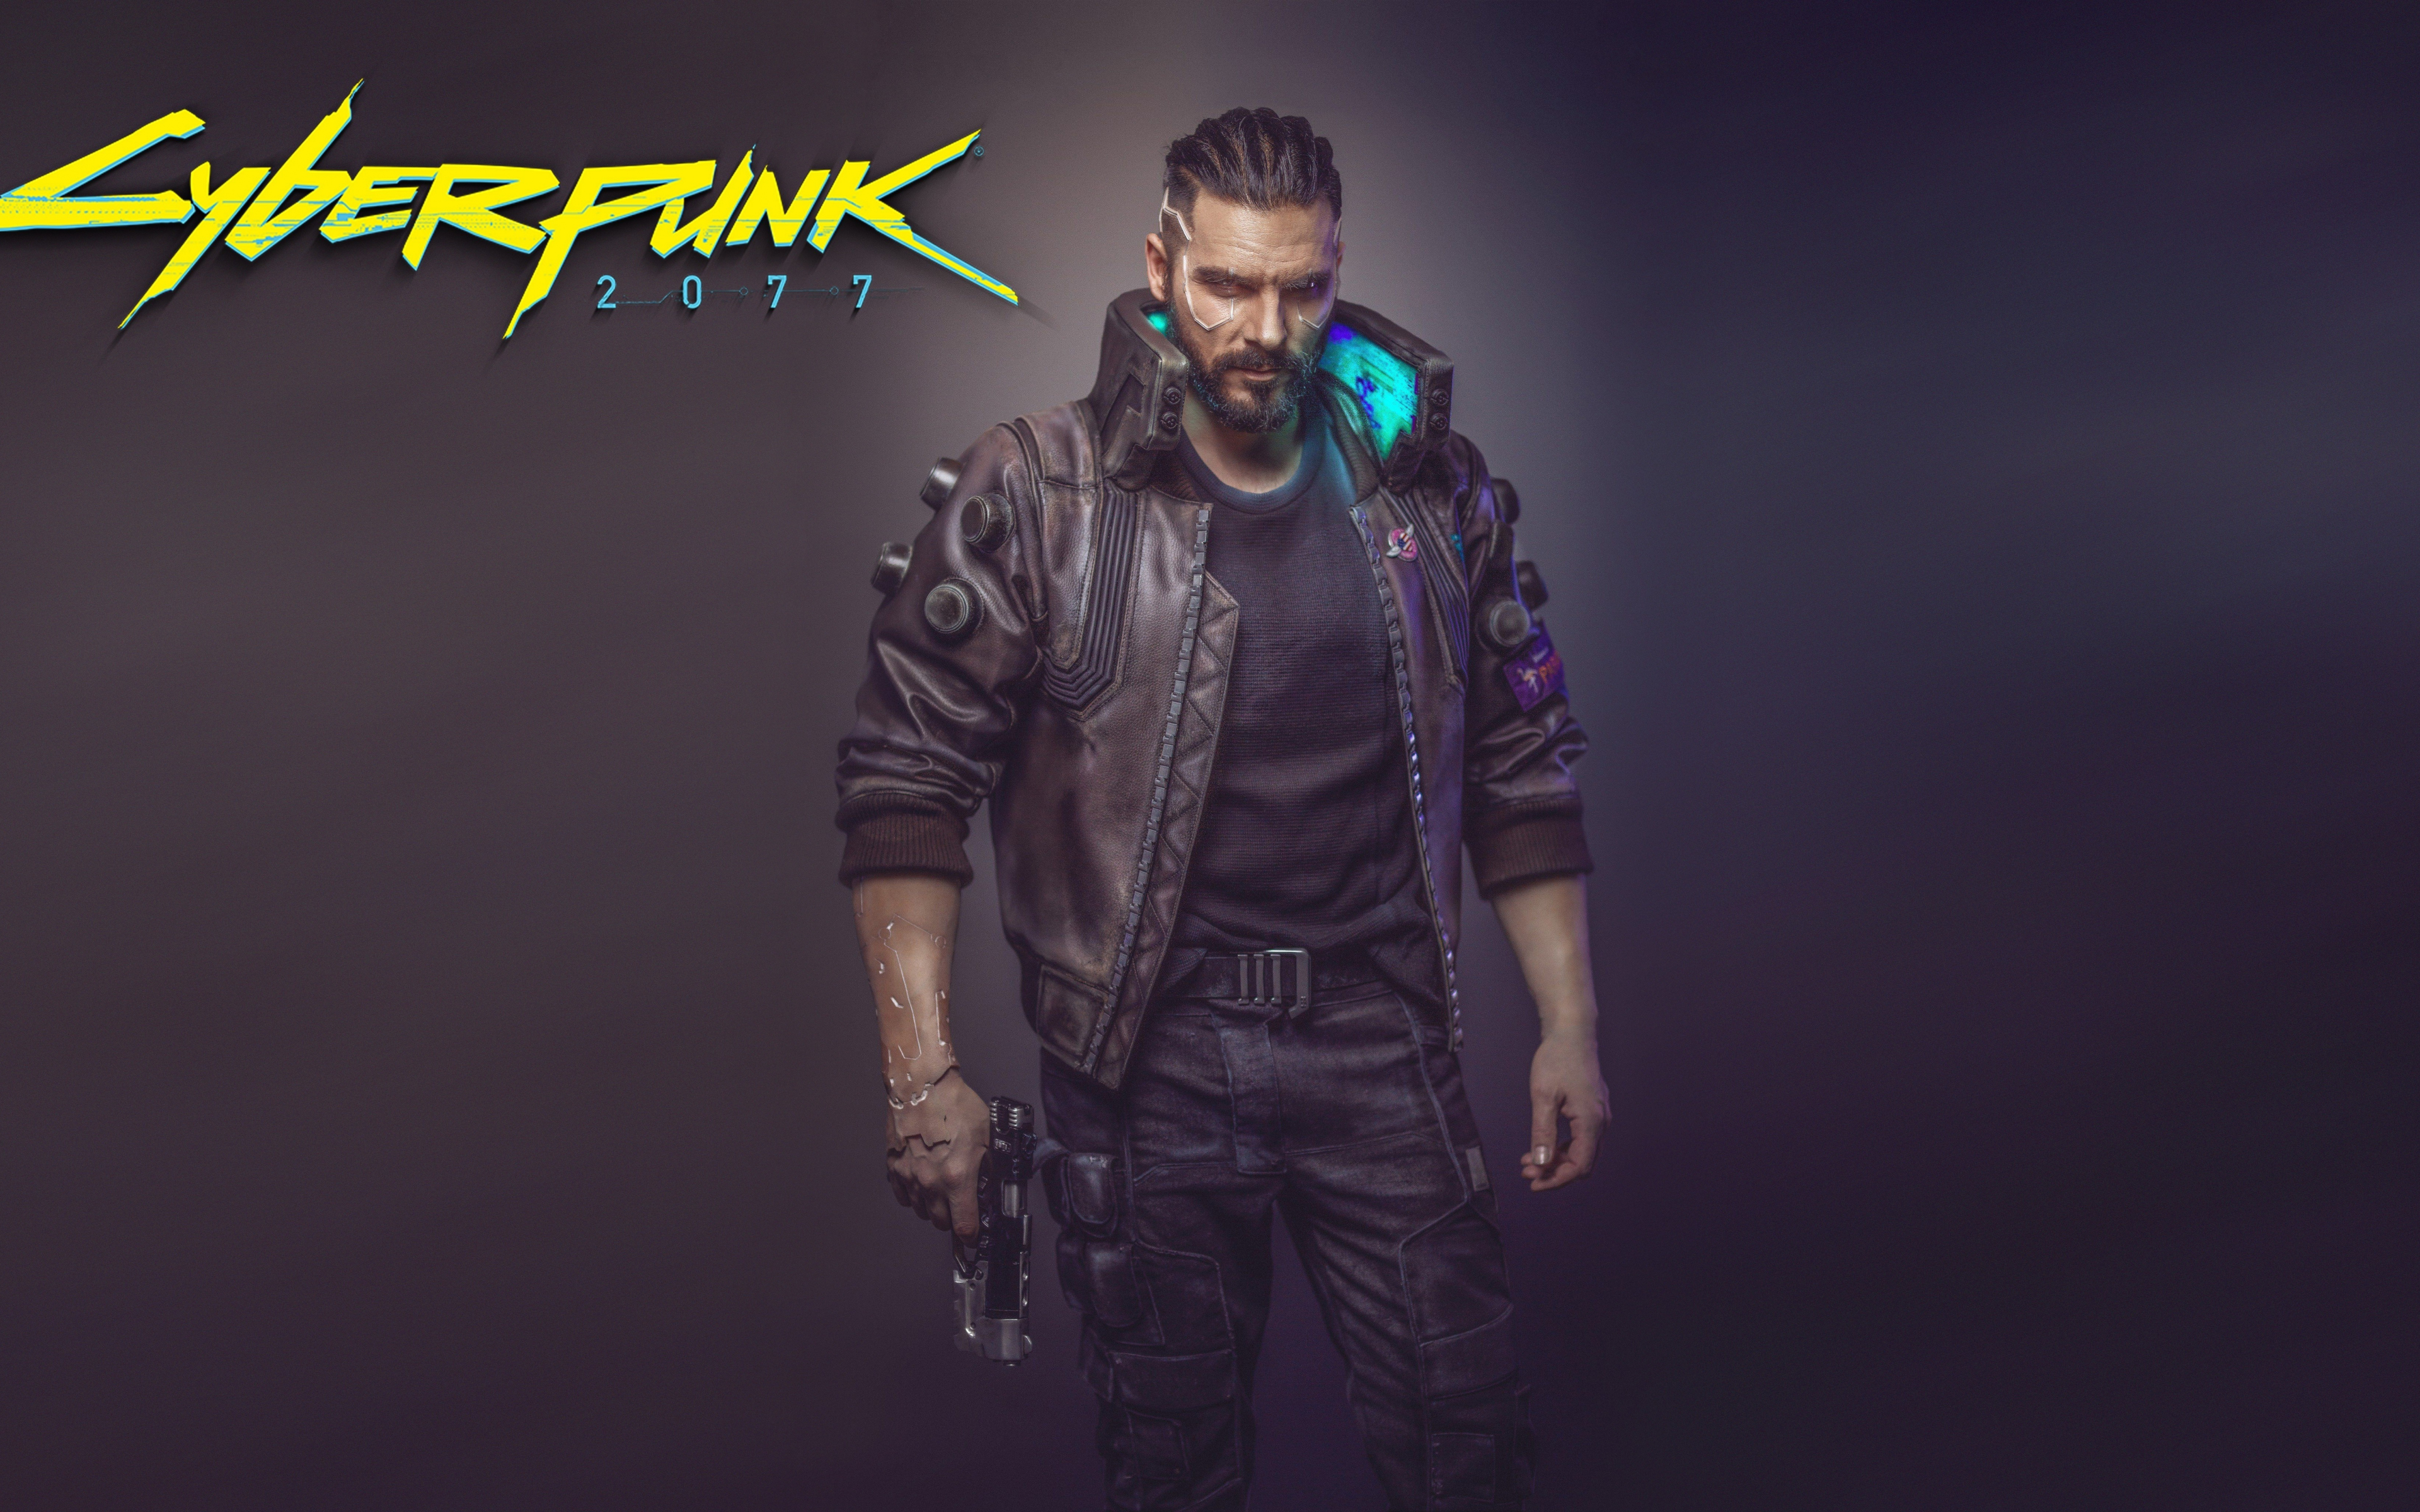 Download 3840x2400 cyberpunk man with gun, video game 4k wallpaper, 4k, ultra HD 16:10 wallpaper, 3840x2400 HD image, background, 9314